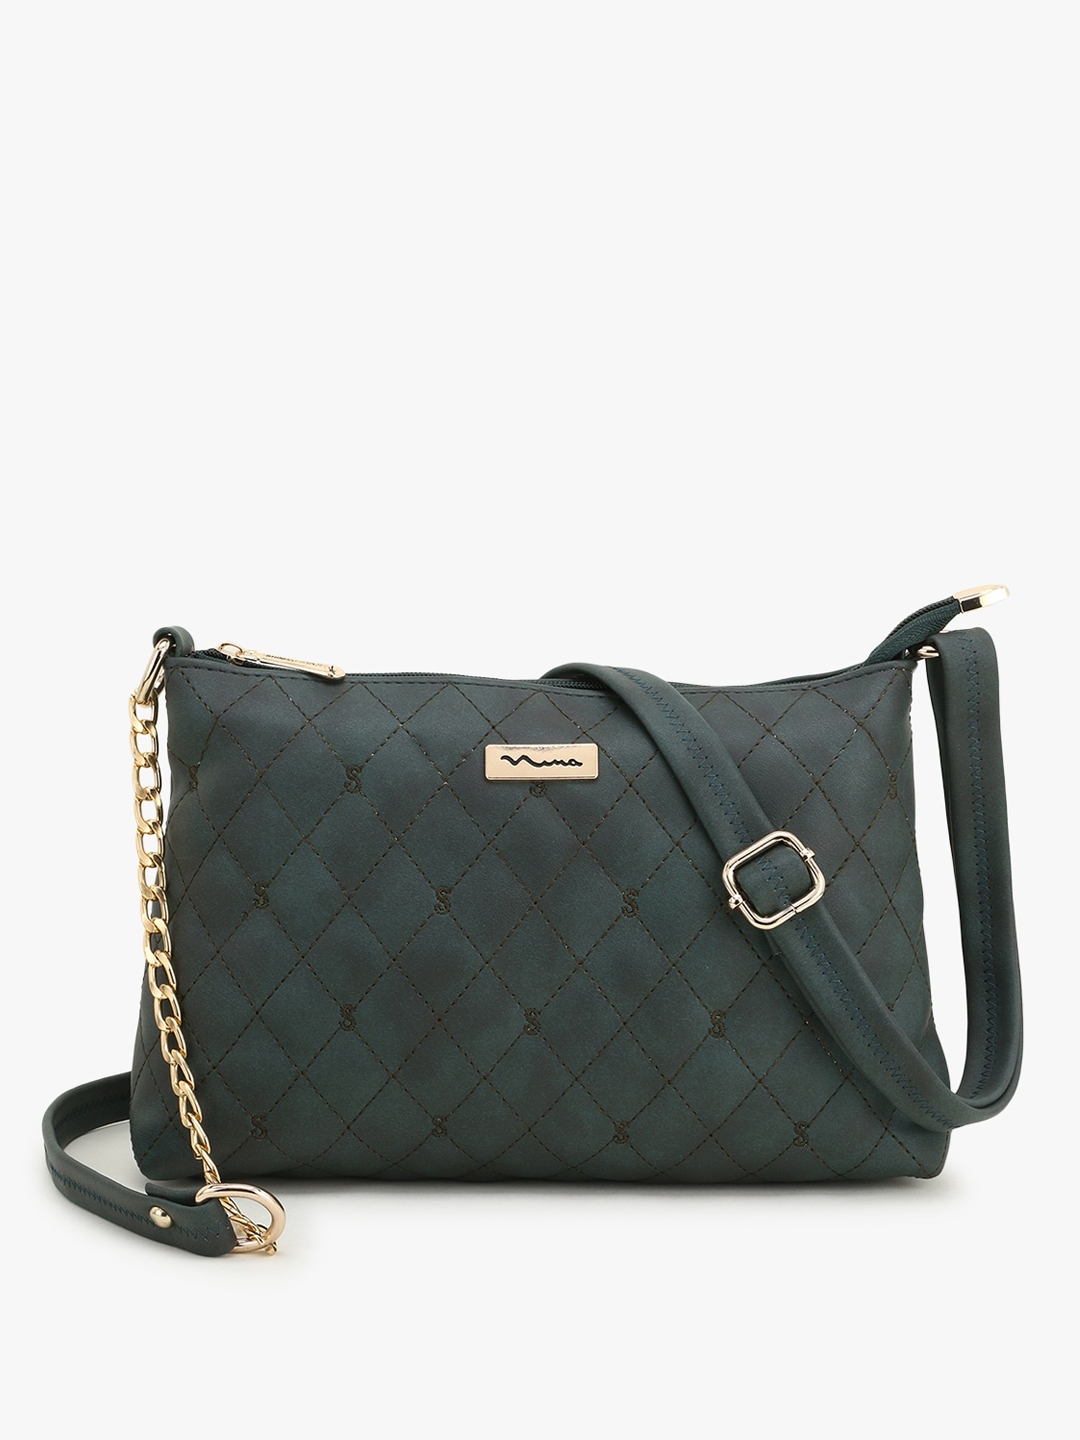 2pc/set Fashionable Elegant Geometric Pattern Pu Leather Tote Bag